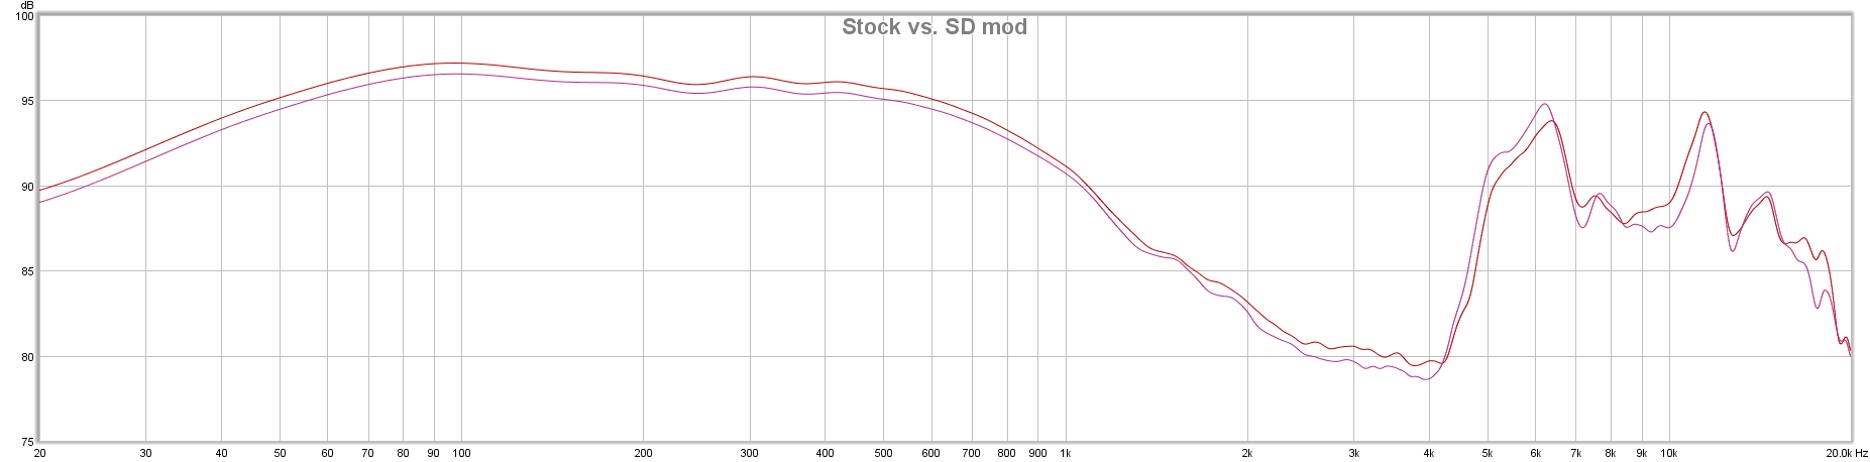 stock vs SD mod.jpg